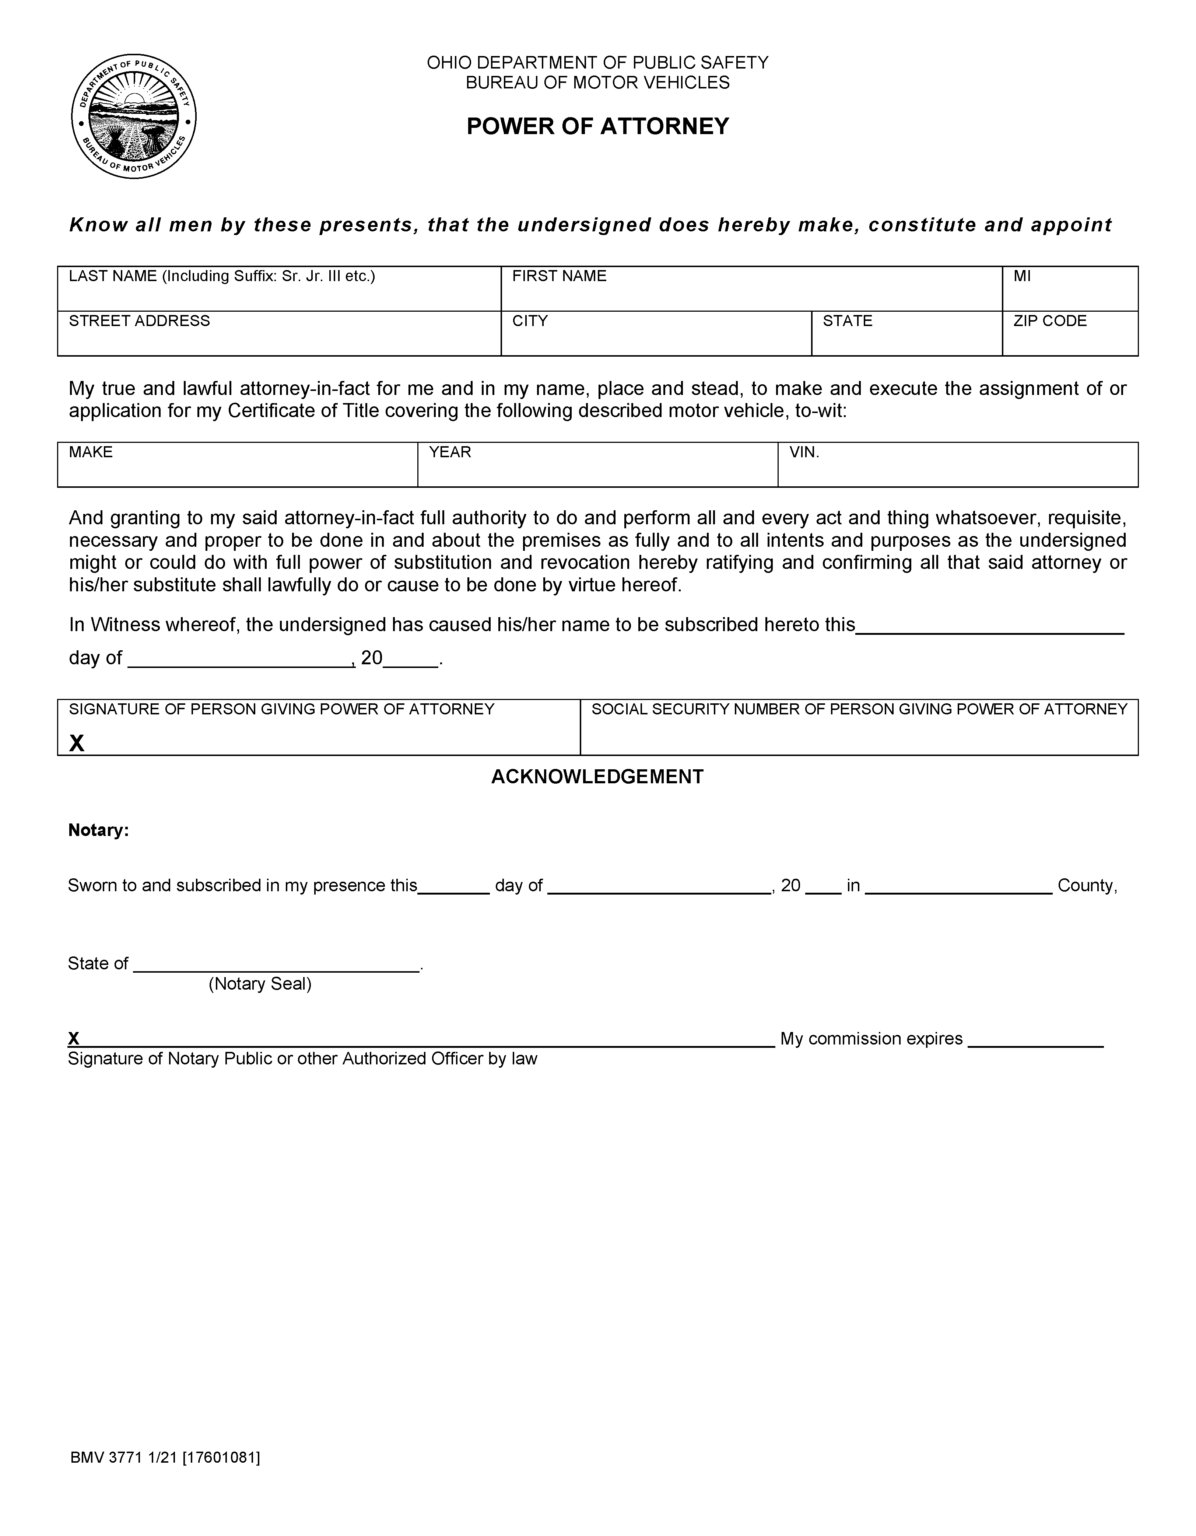 Free Ohio Motor Vehicle Power of Attorney (Form BMV 3771) PDF